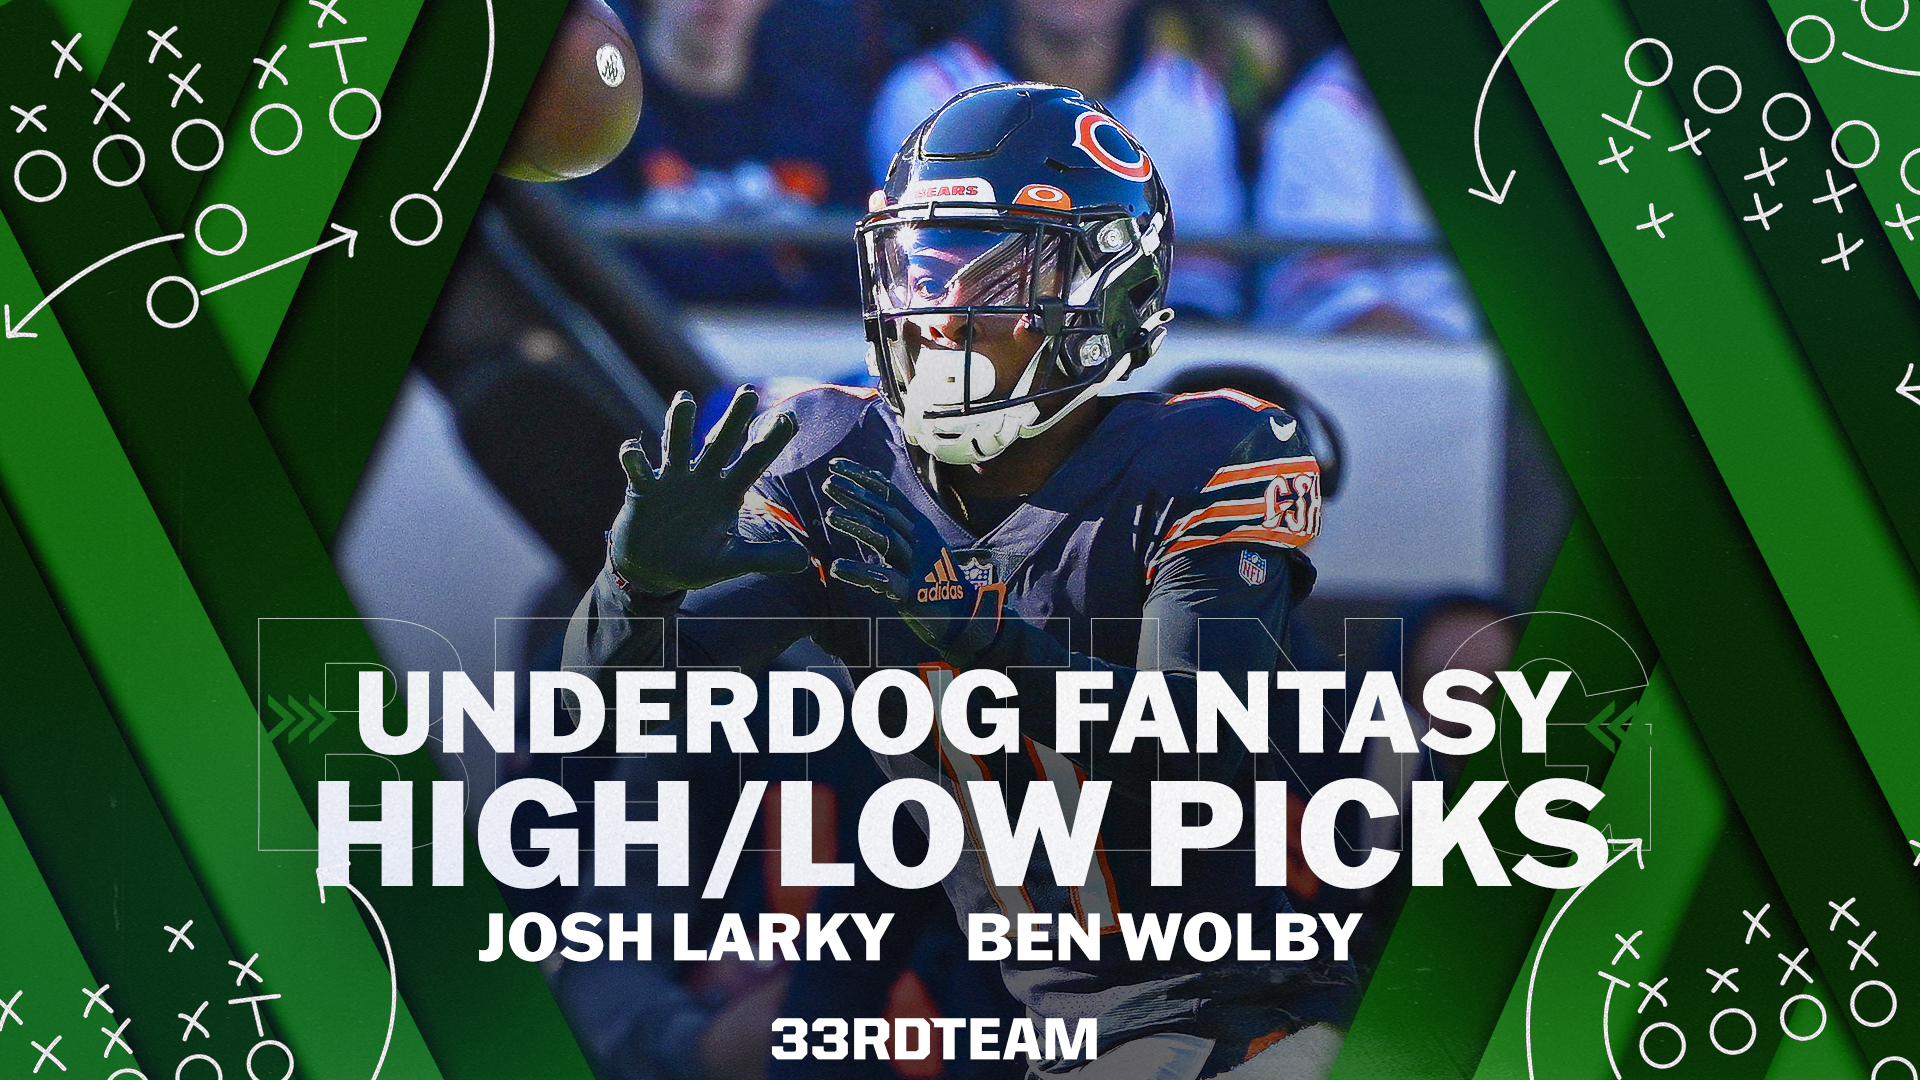 Josh Larky and Ben Wolby’s Underdog Fantasy High/Low Picks